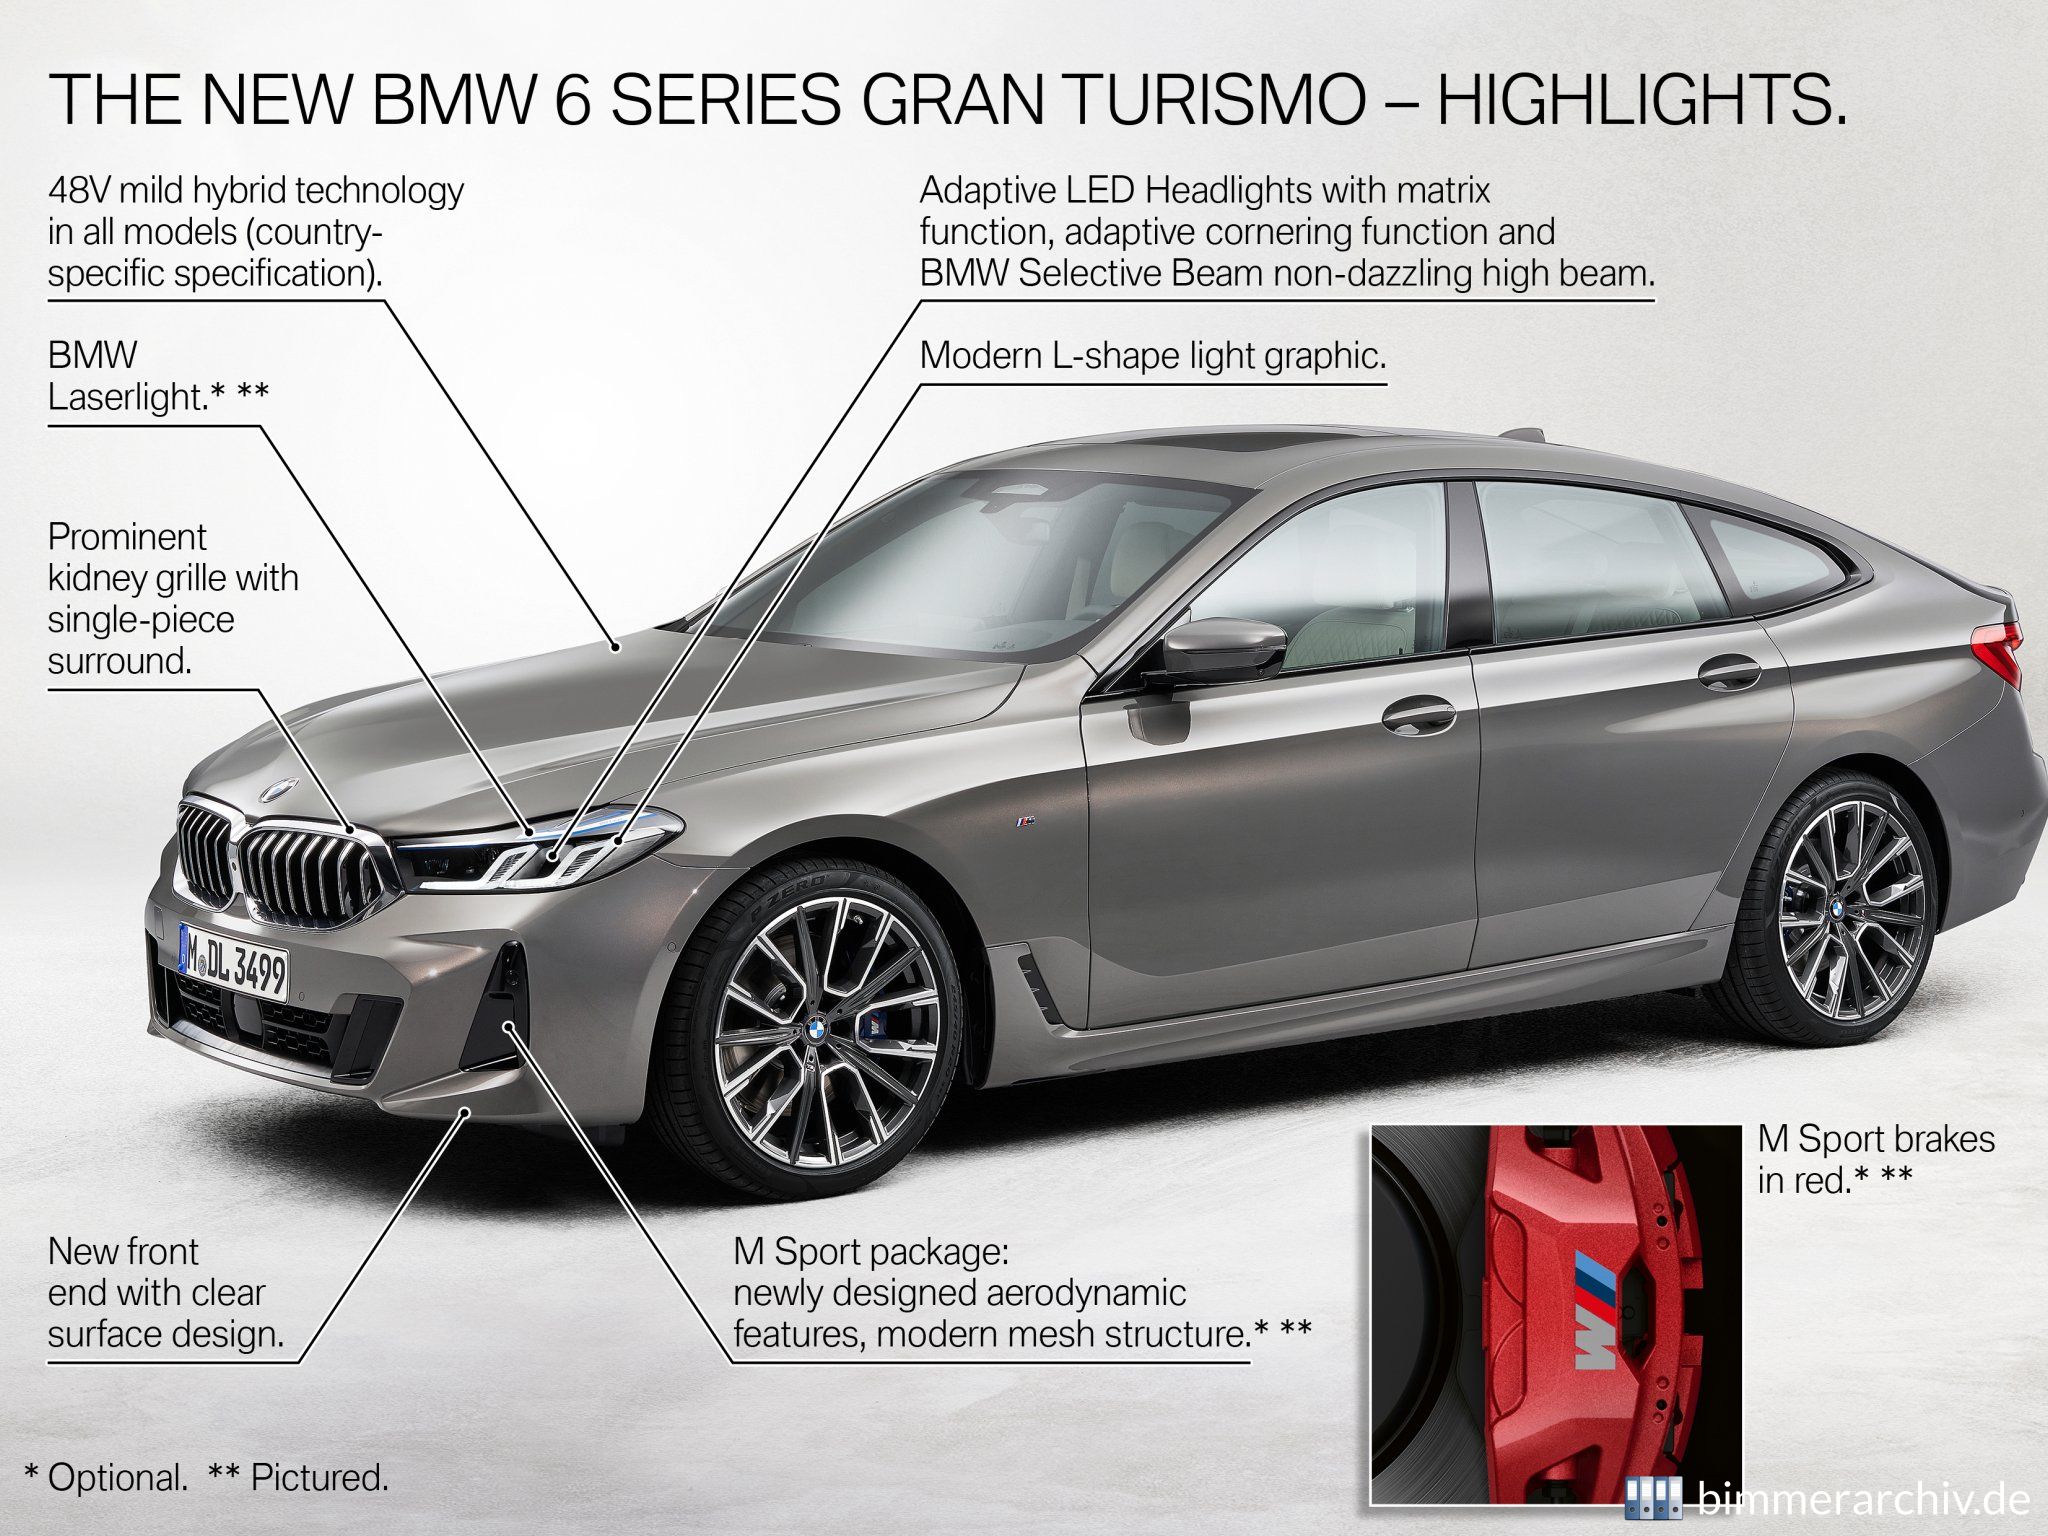 BMW 640i xDrive Gran Turismo - Highlights